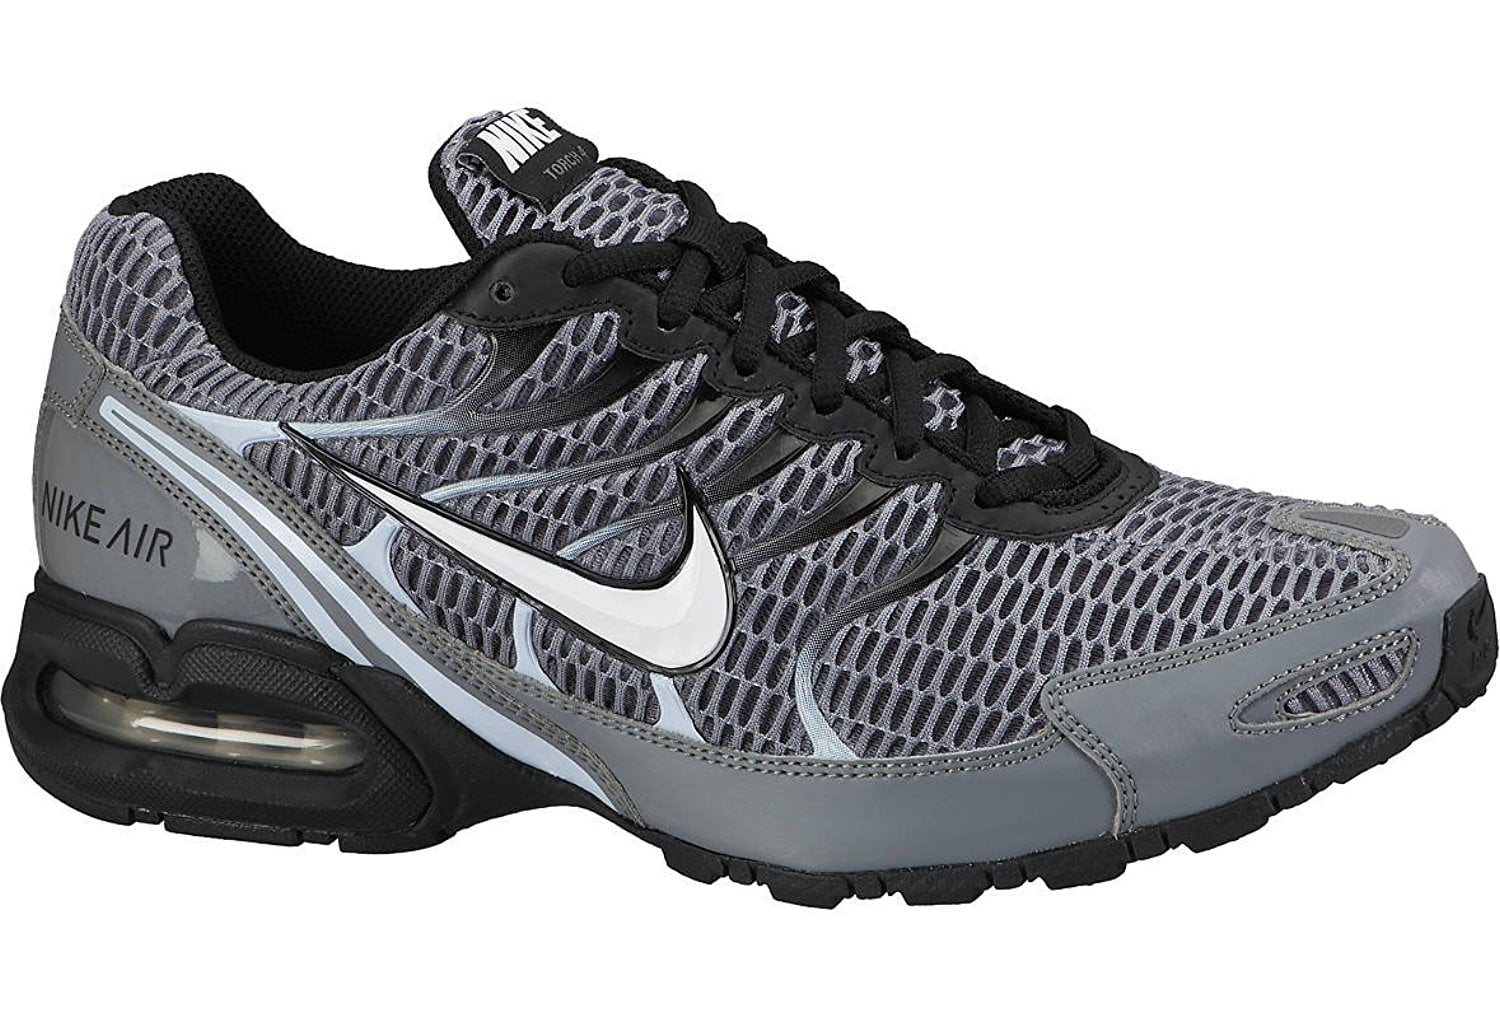 Nike Men's Air Max Torch 4 Running Shoe Â Cool Grey/White/Black/Pure Platinum 8 D(M) US Walmart.com